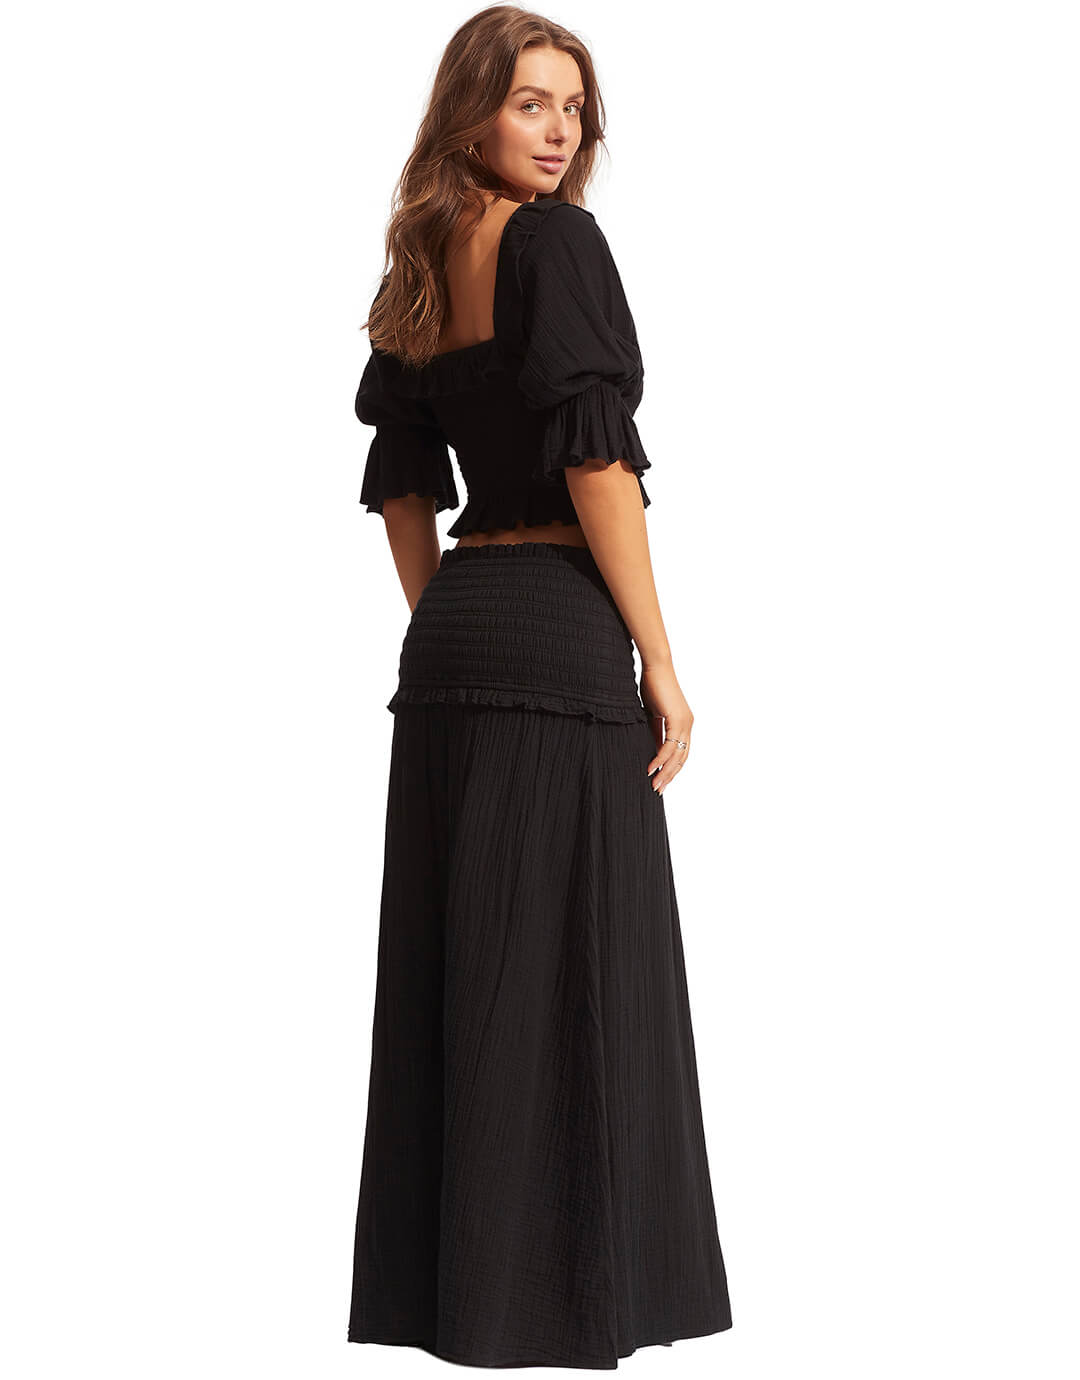 Caspian Strapless Dress/Skirt - Black - Simply Beach UK